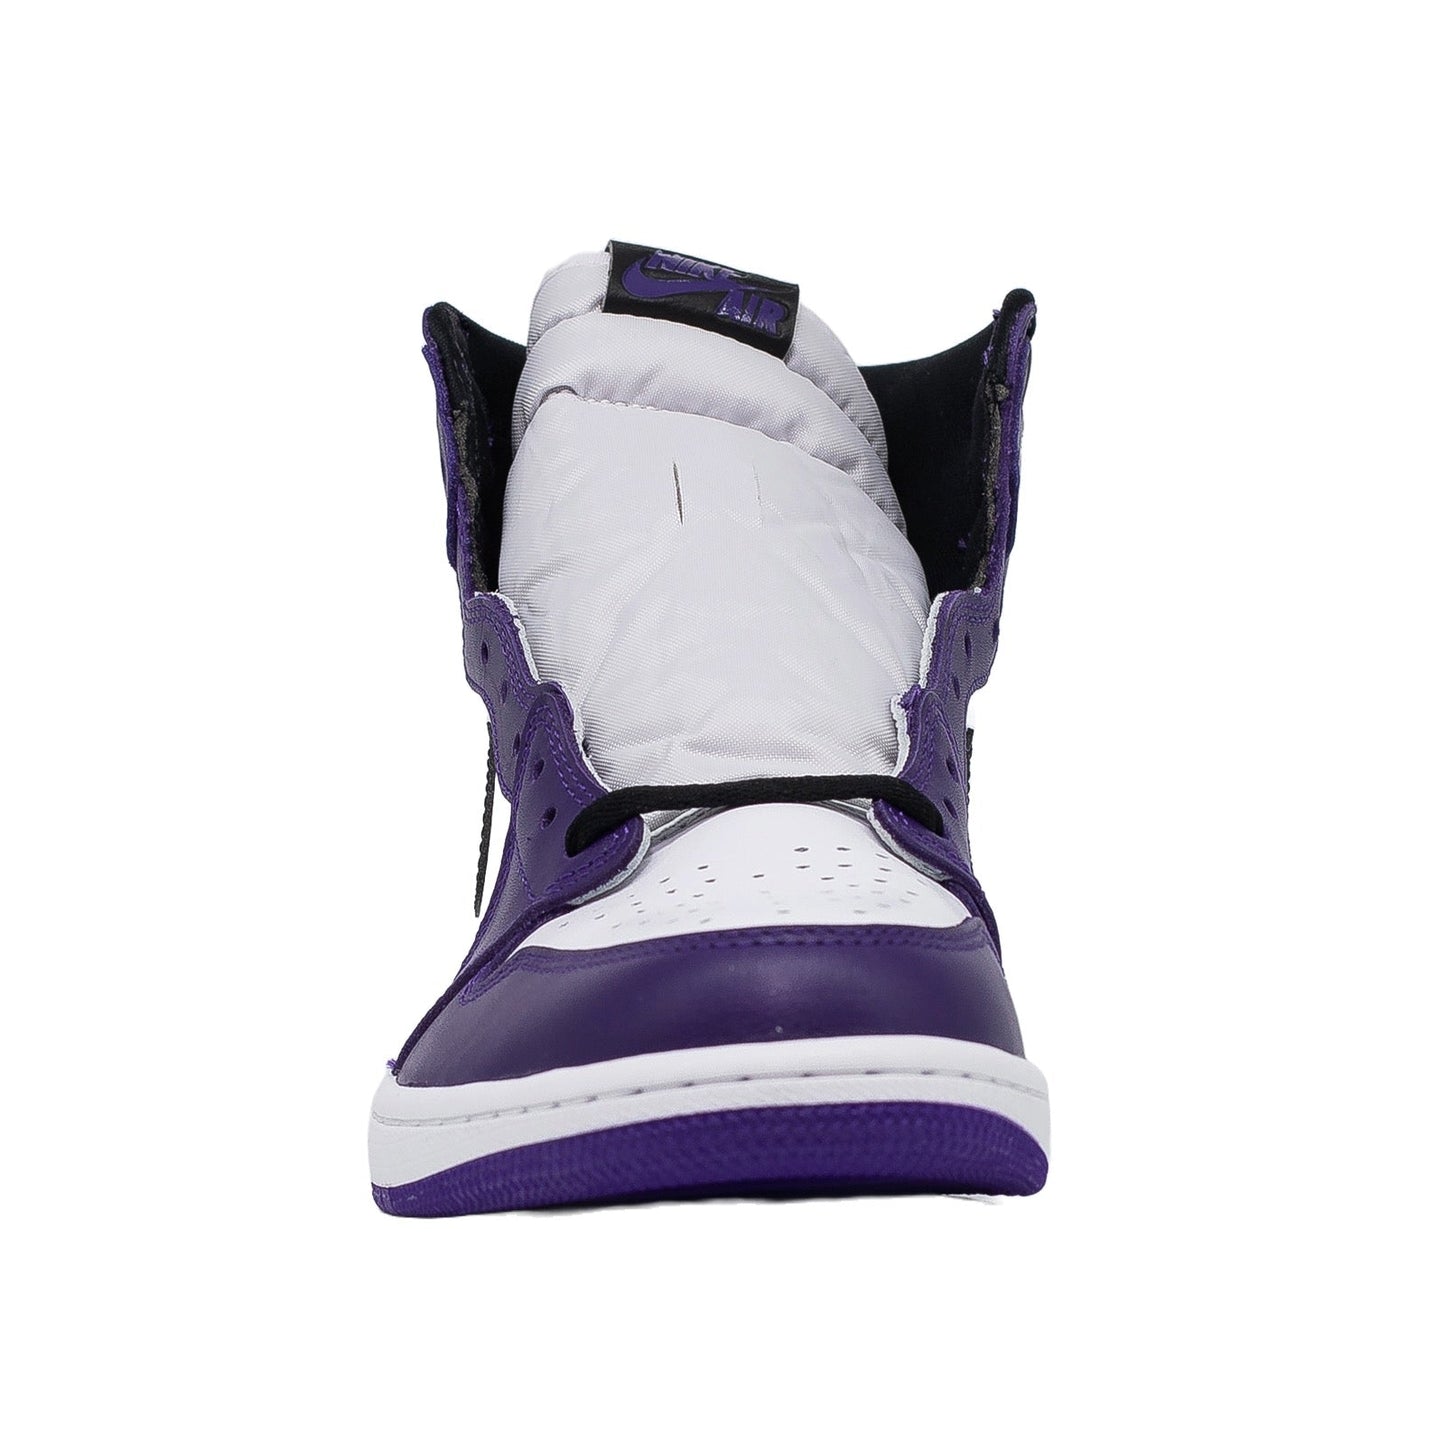 Air Jordan 1 High, Court Purple 2.0